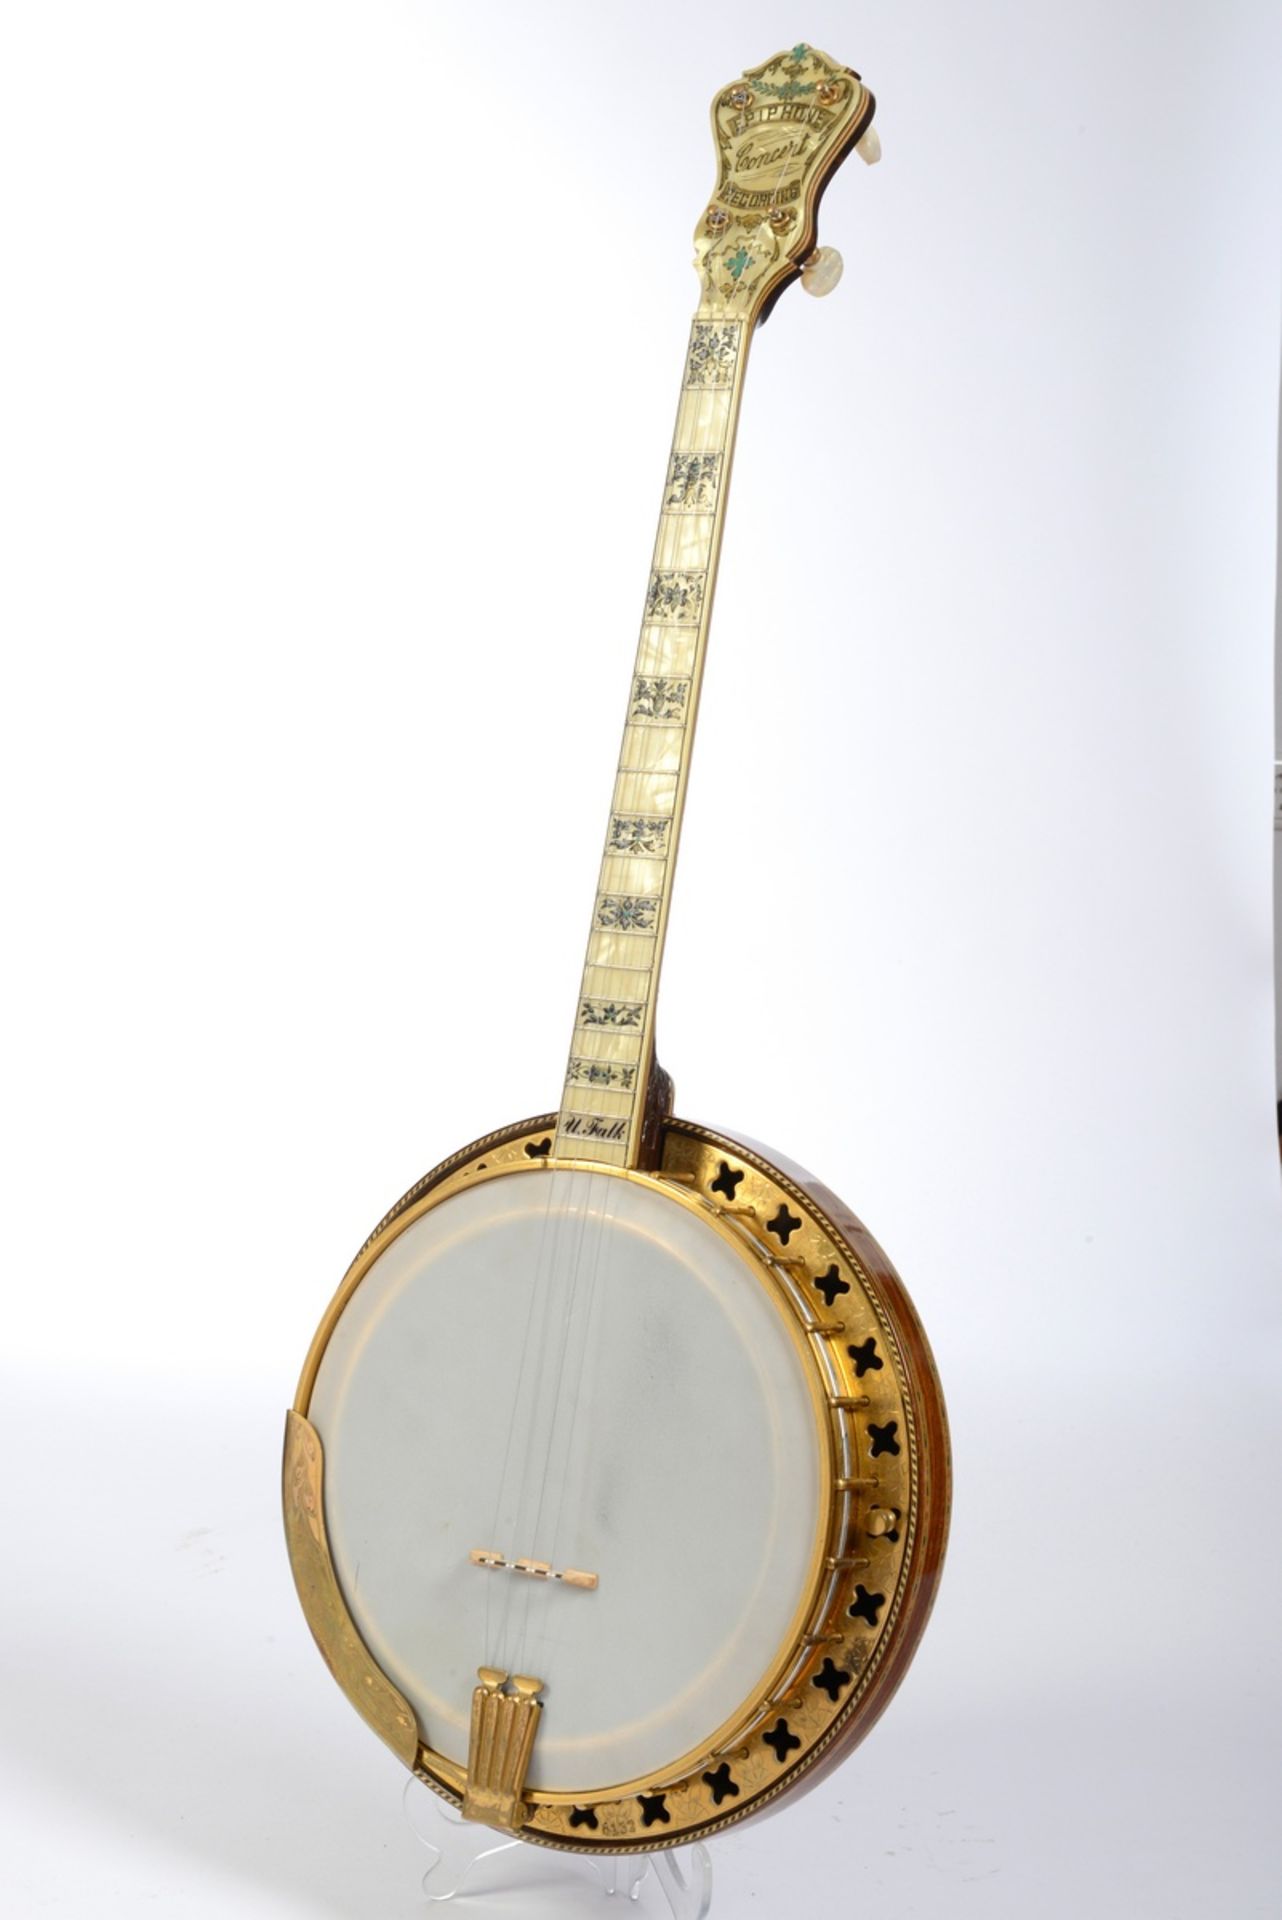 Tenor Banjo, Epiphone Banjo Company, House of Strathopoulo Inc. New York, model Recording Art Conce